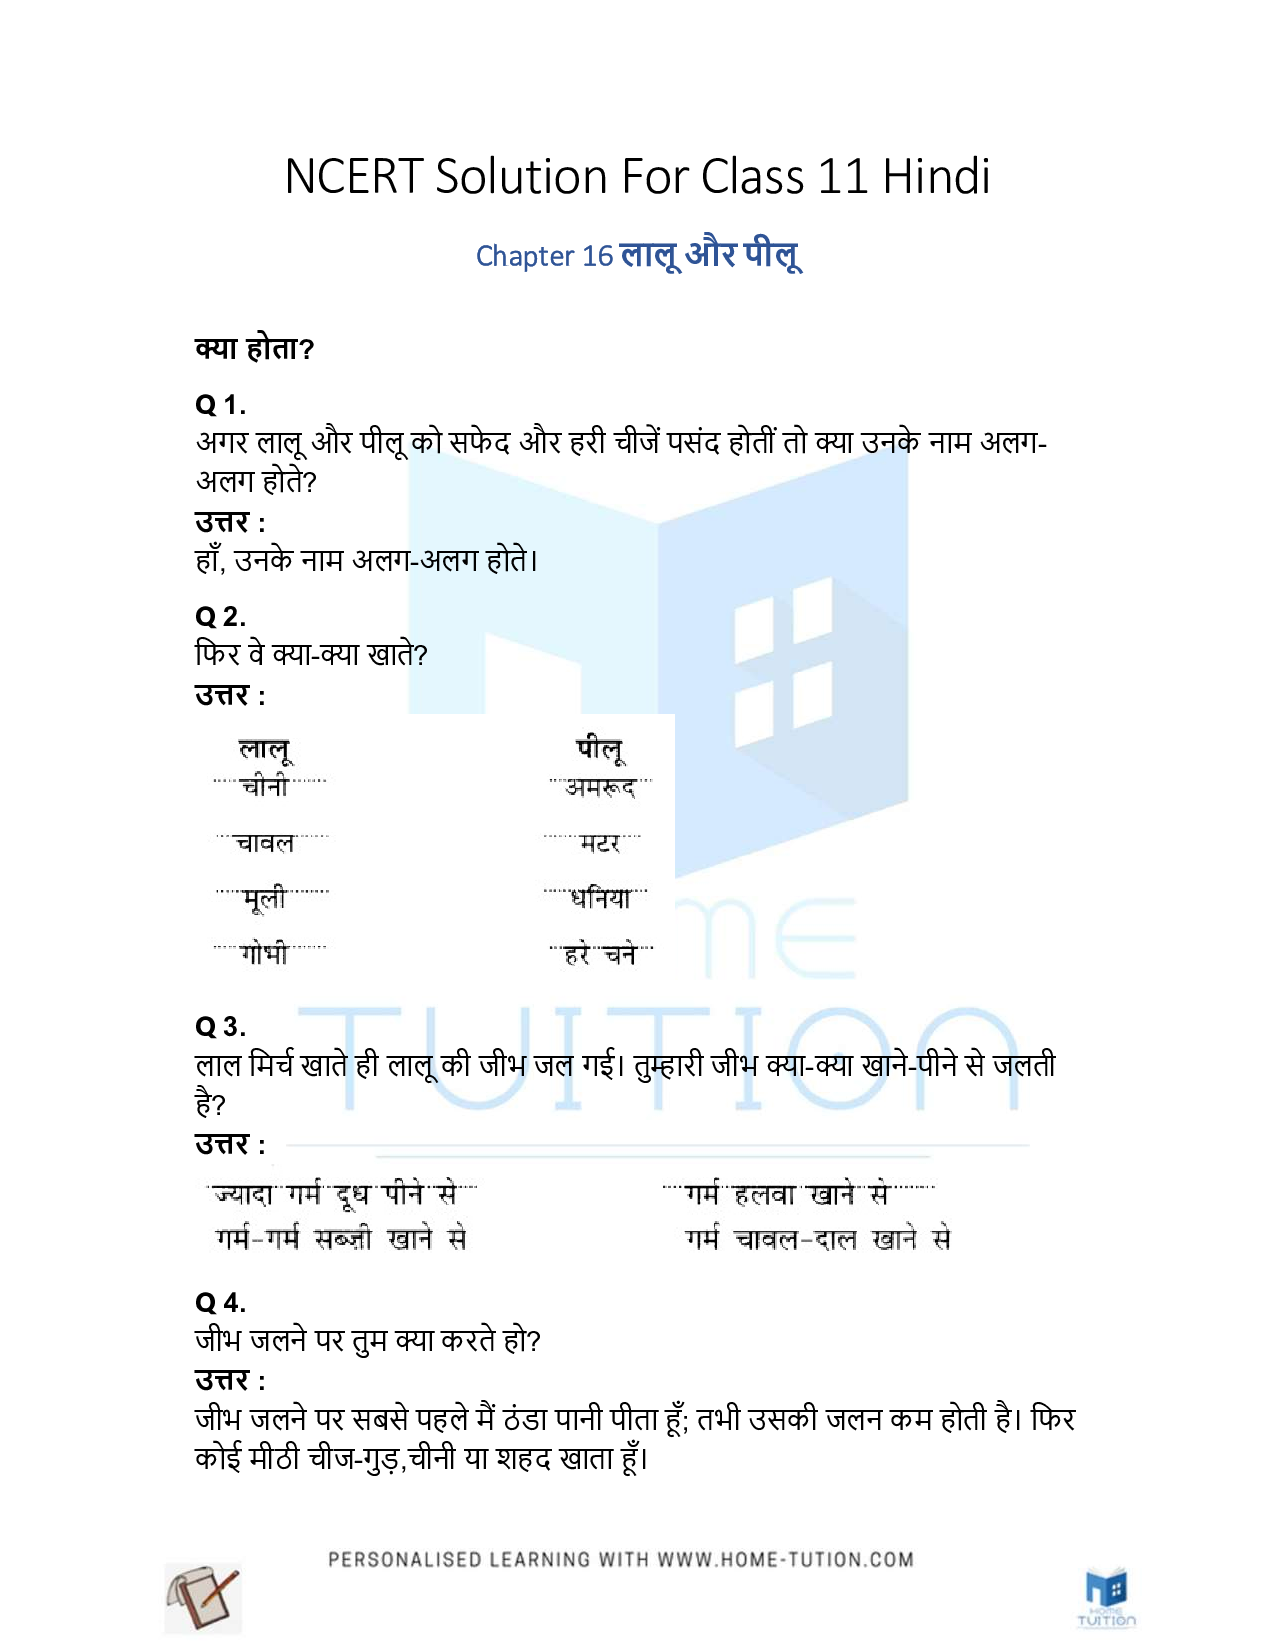 NCERT Solution for Class 1 Hindi Chapter 16 Lalu Aur Peelu (लालू-और-पीलू)